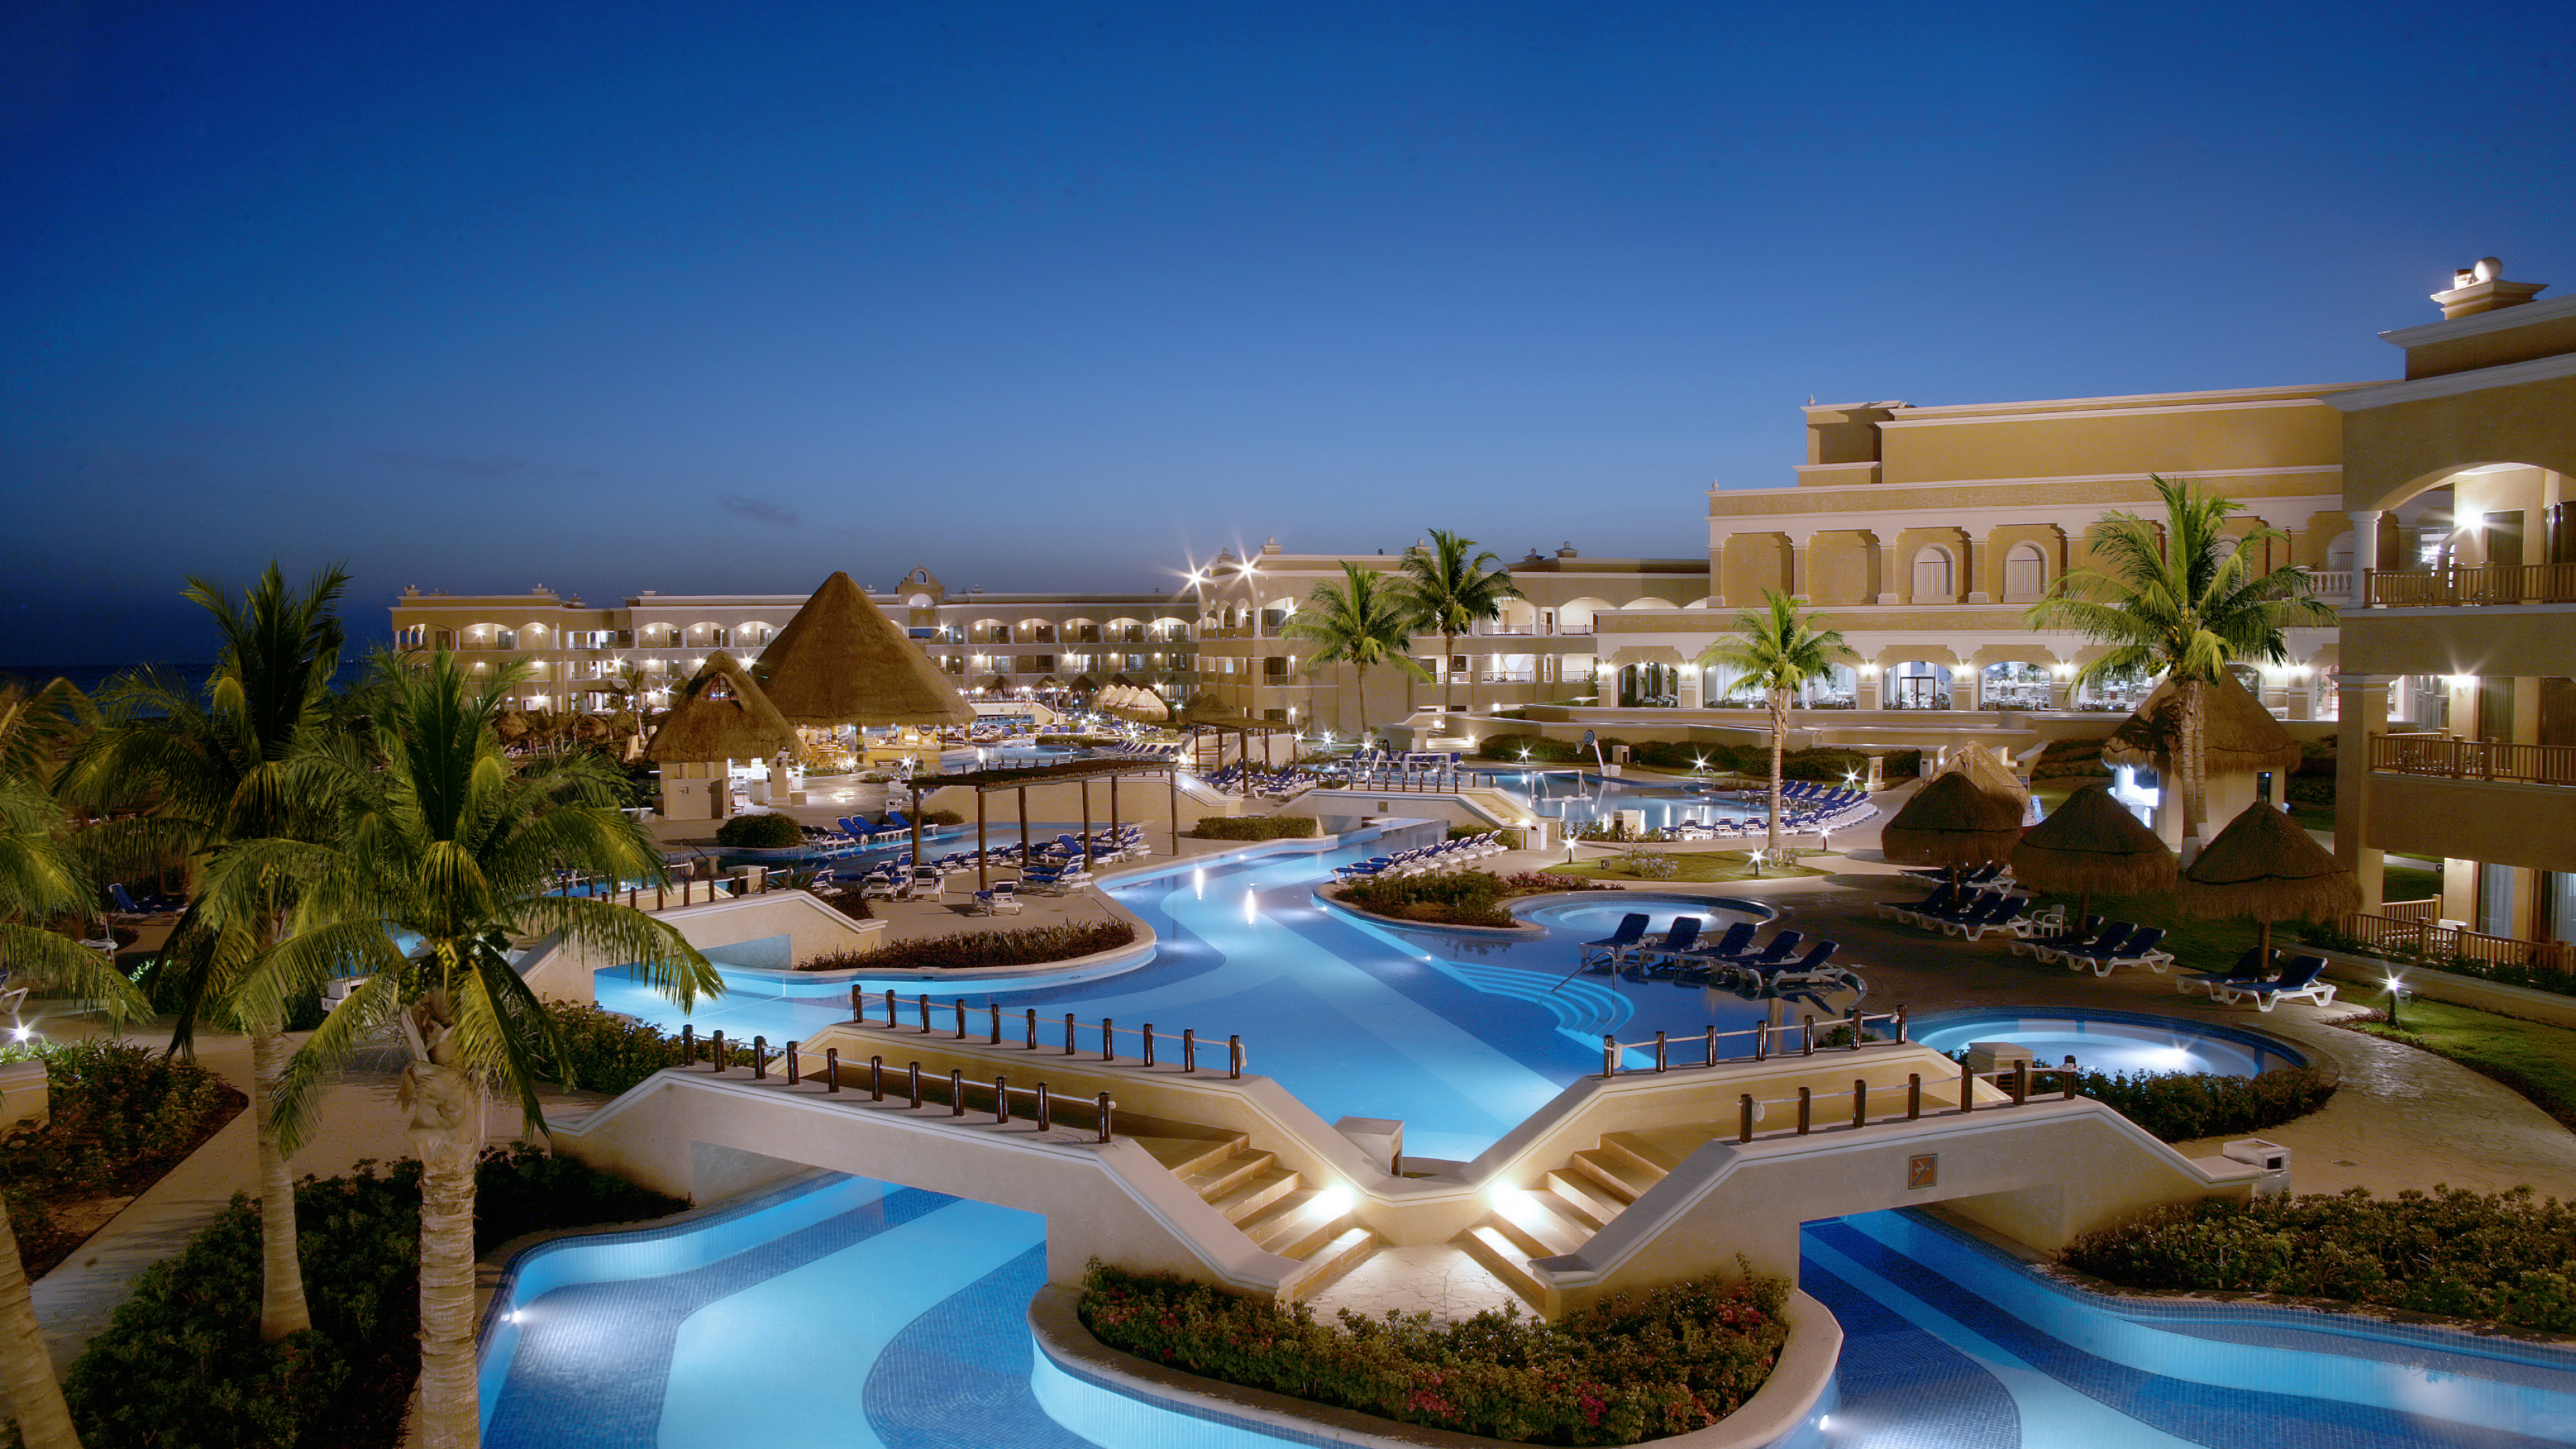 Wallpaper Grand Velas Riviera Maya Best Hotels Of 2017 Tourism Travel Resort Vacation